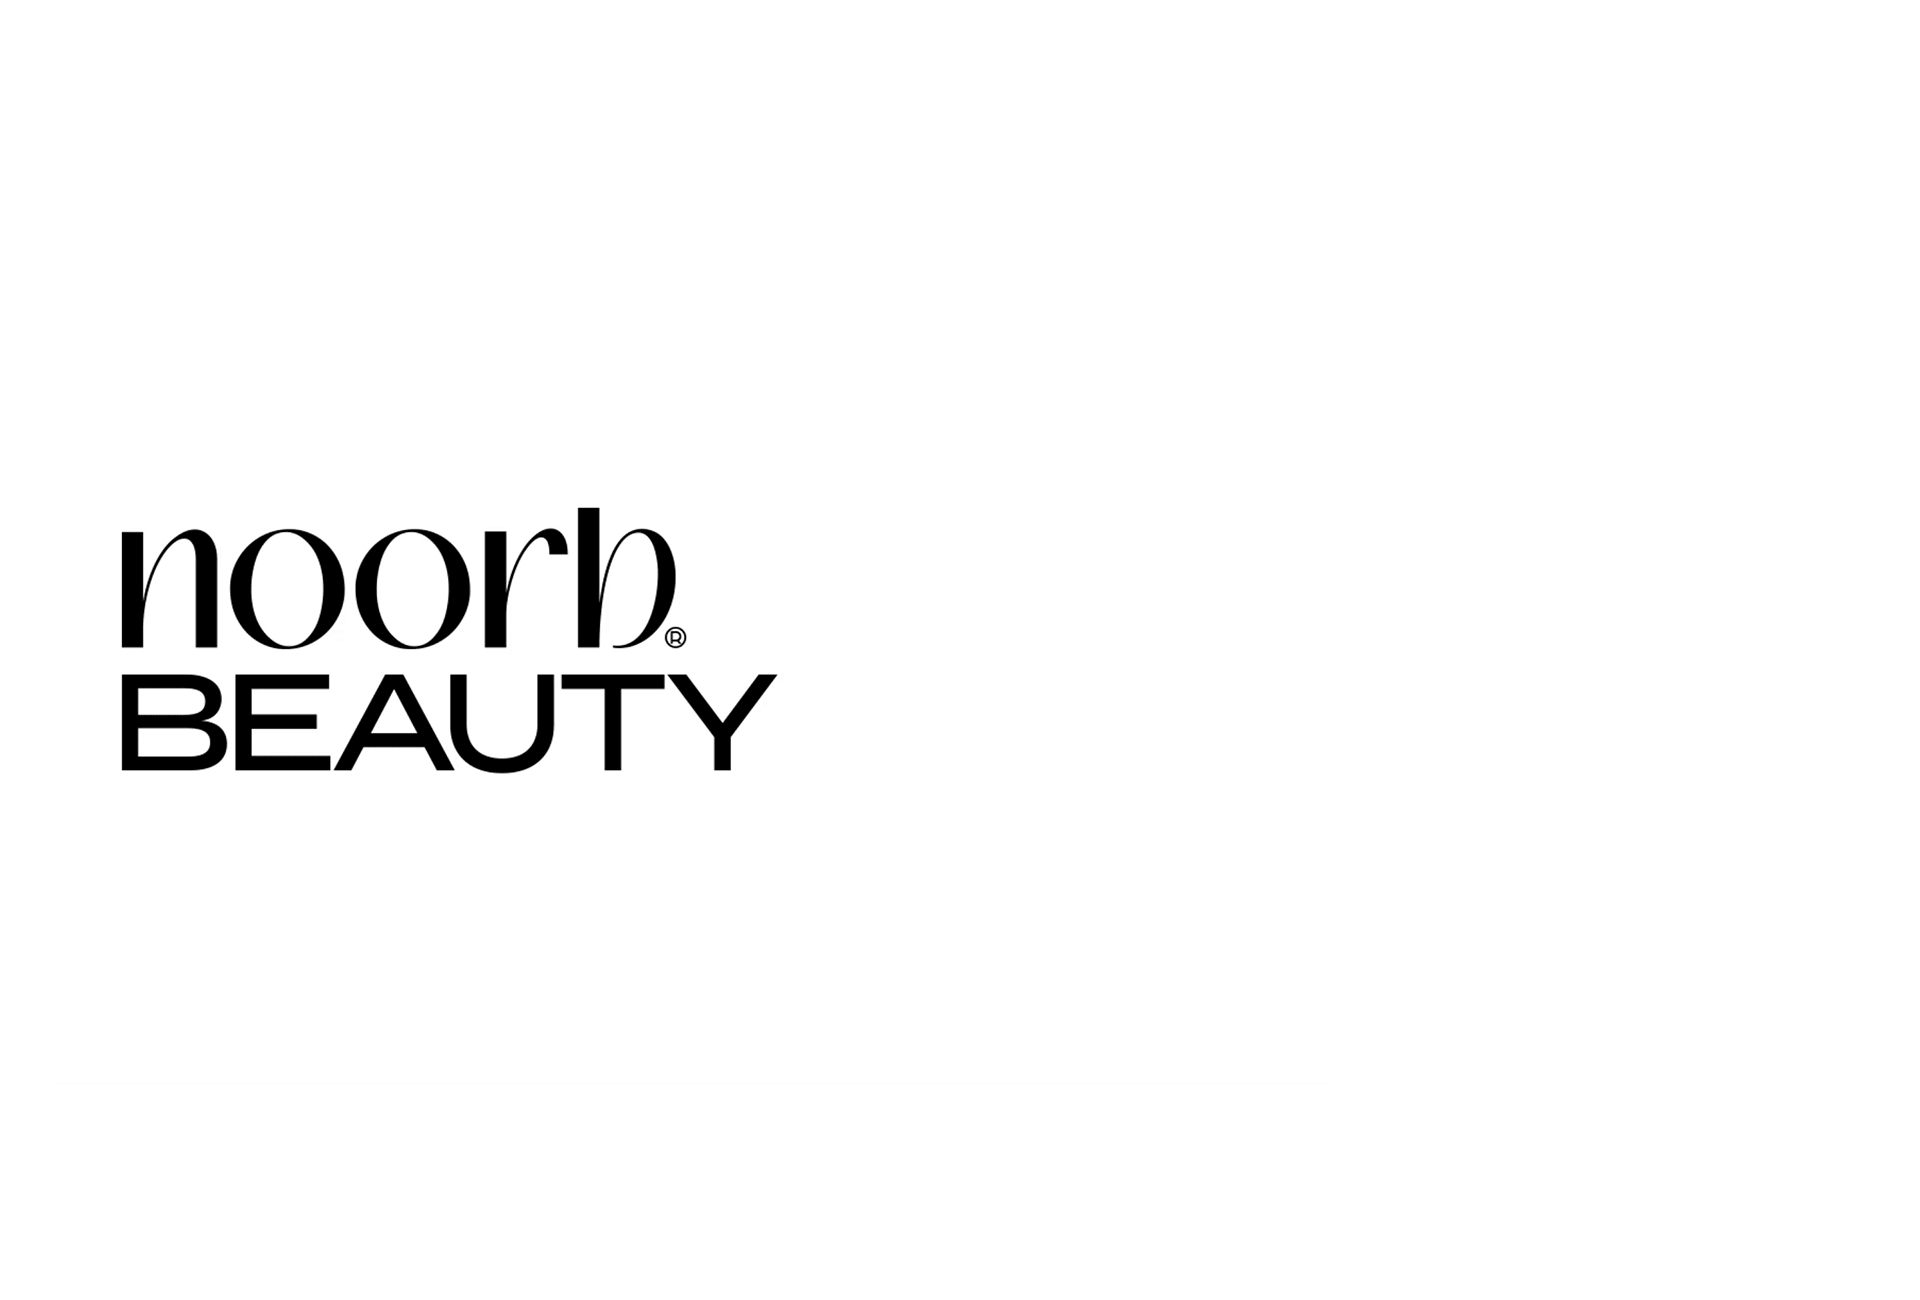 Noorb Beauty Branding Designed Formascope